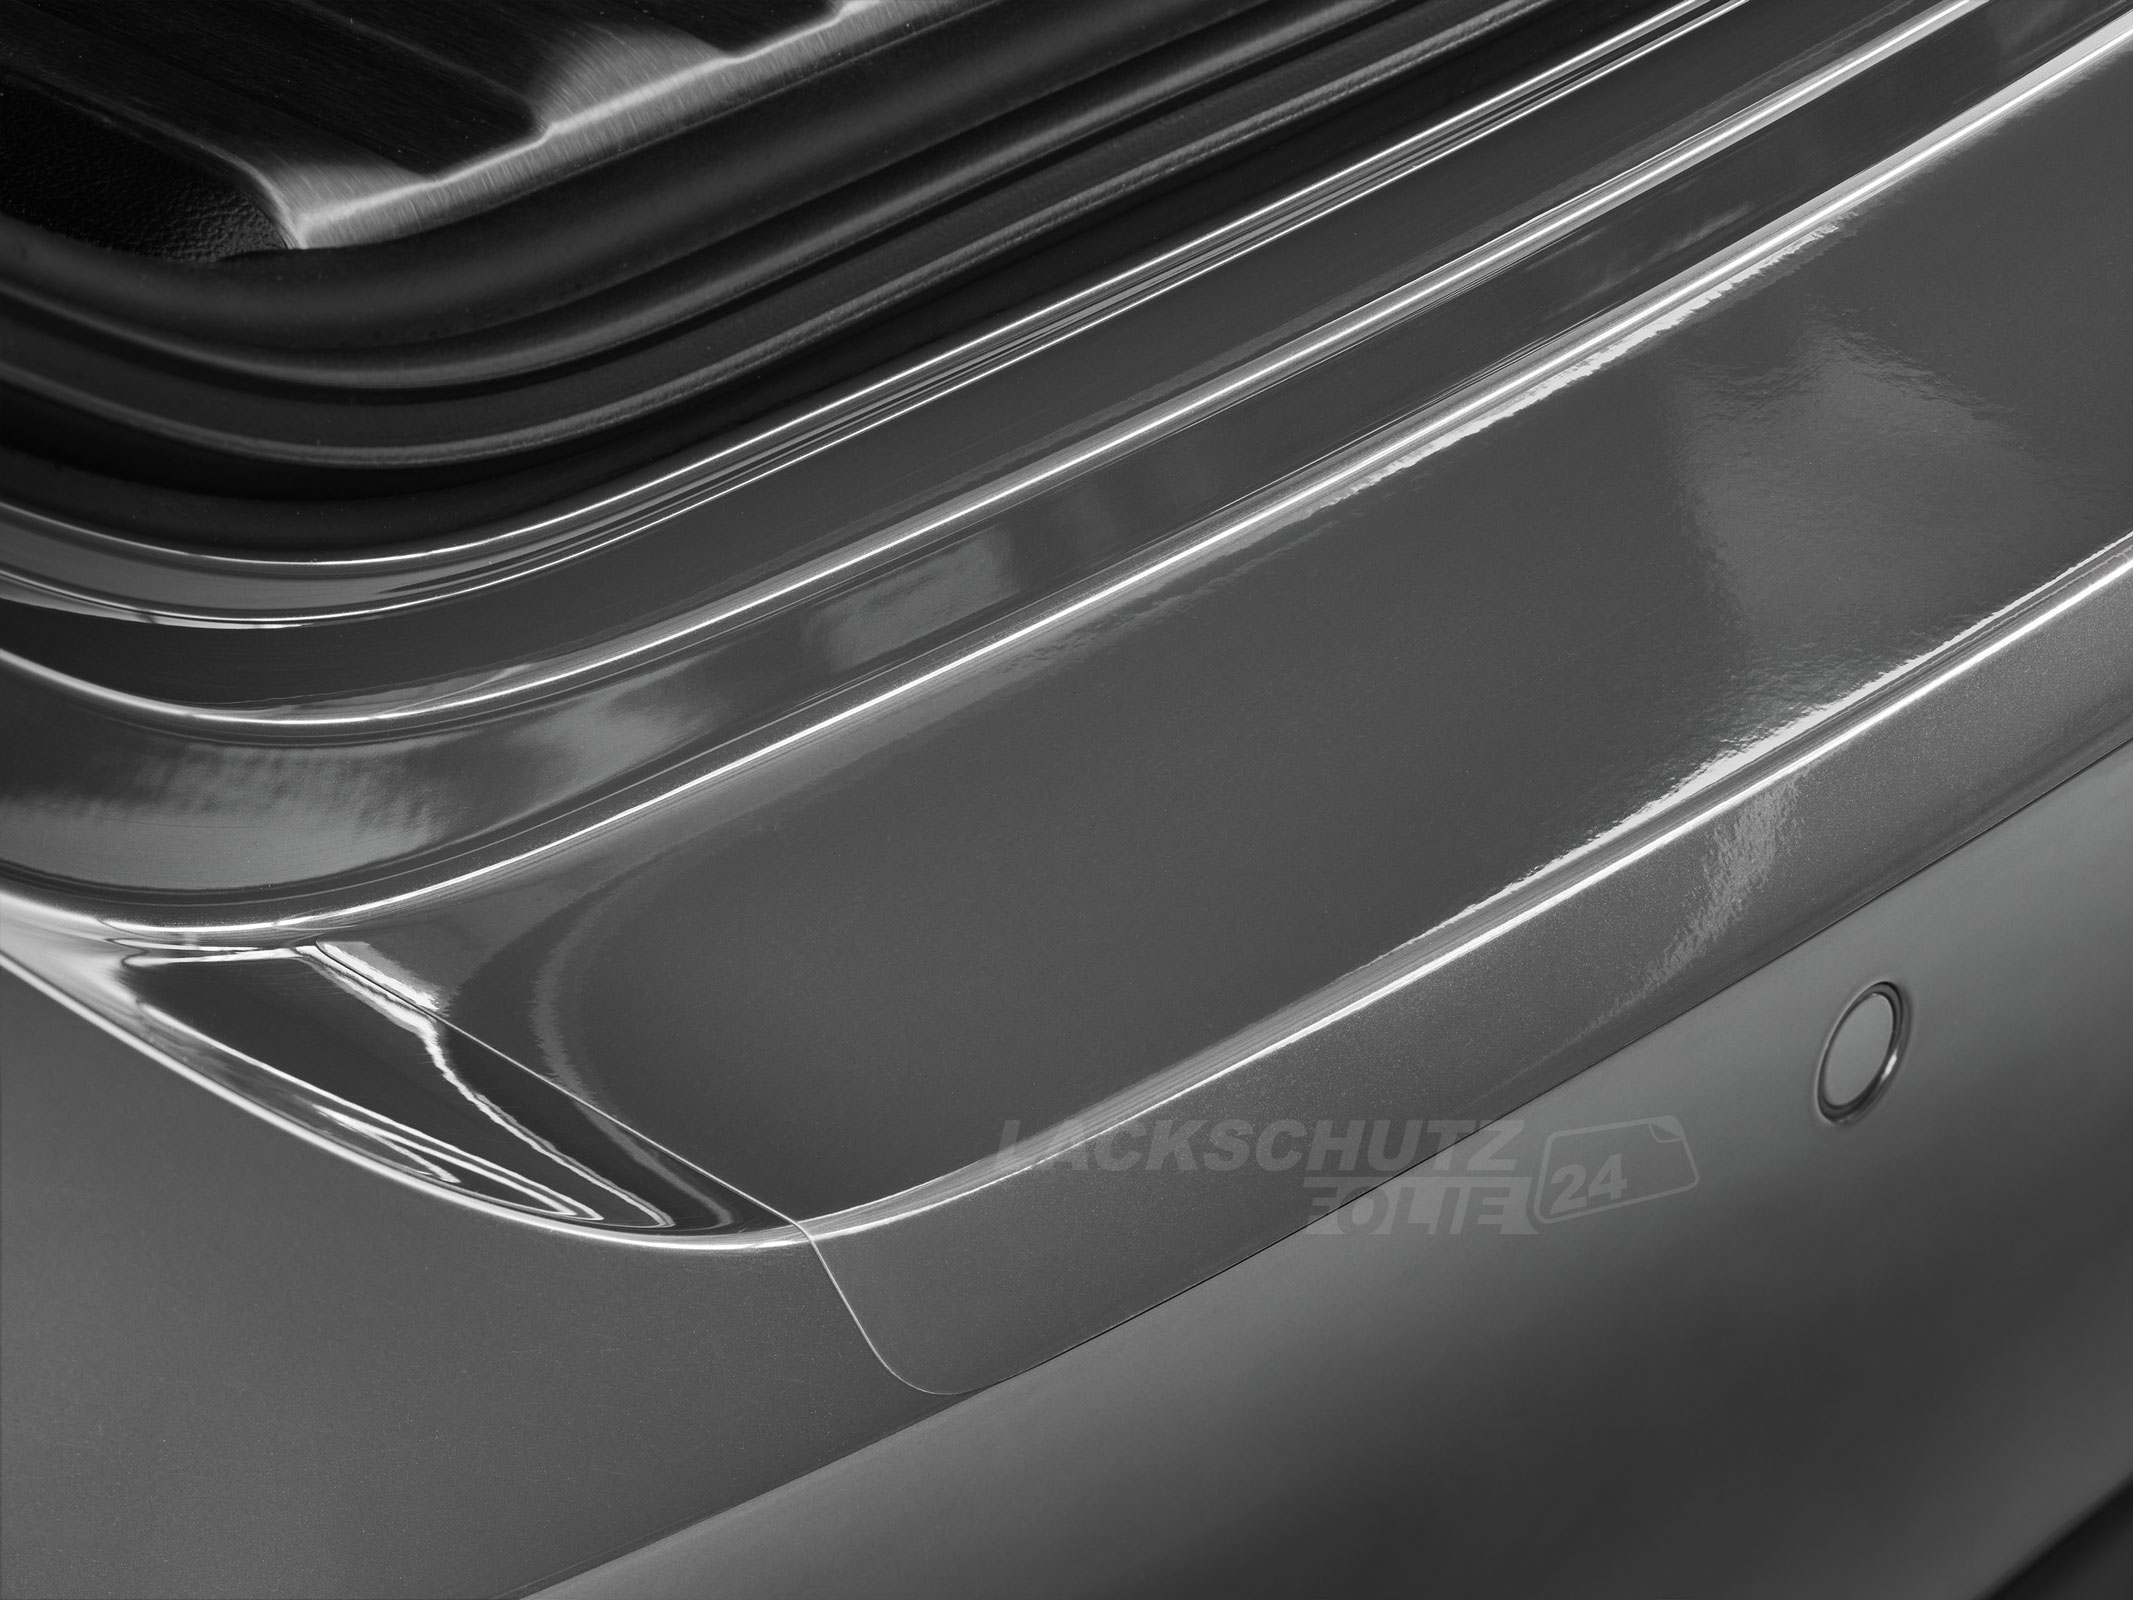 Ladekantenschutzfolie - Transparent Glatt Hochglänzend 240 µm stark für Audi Q7 (I) Typ 4L, BJ 2006-2015